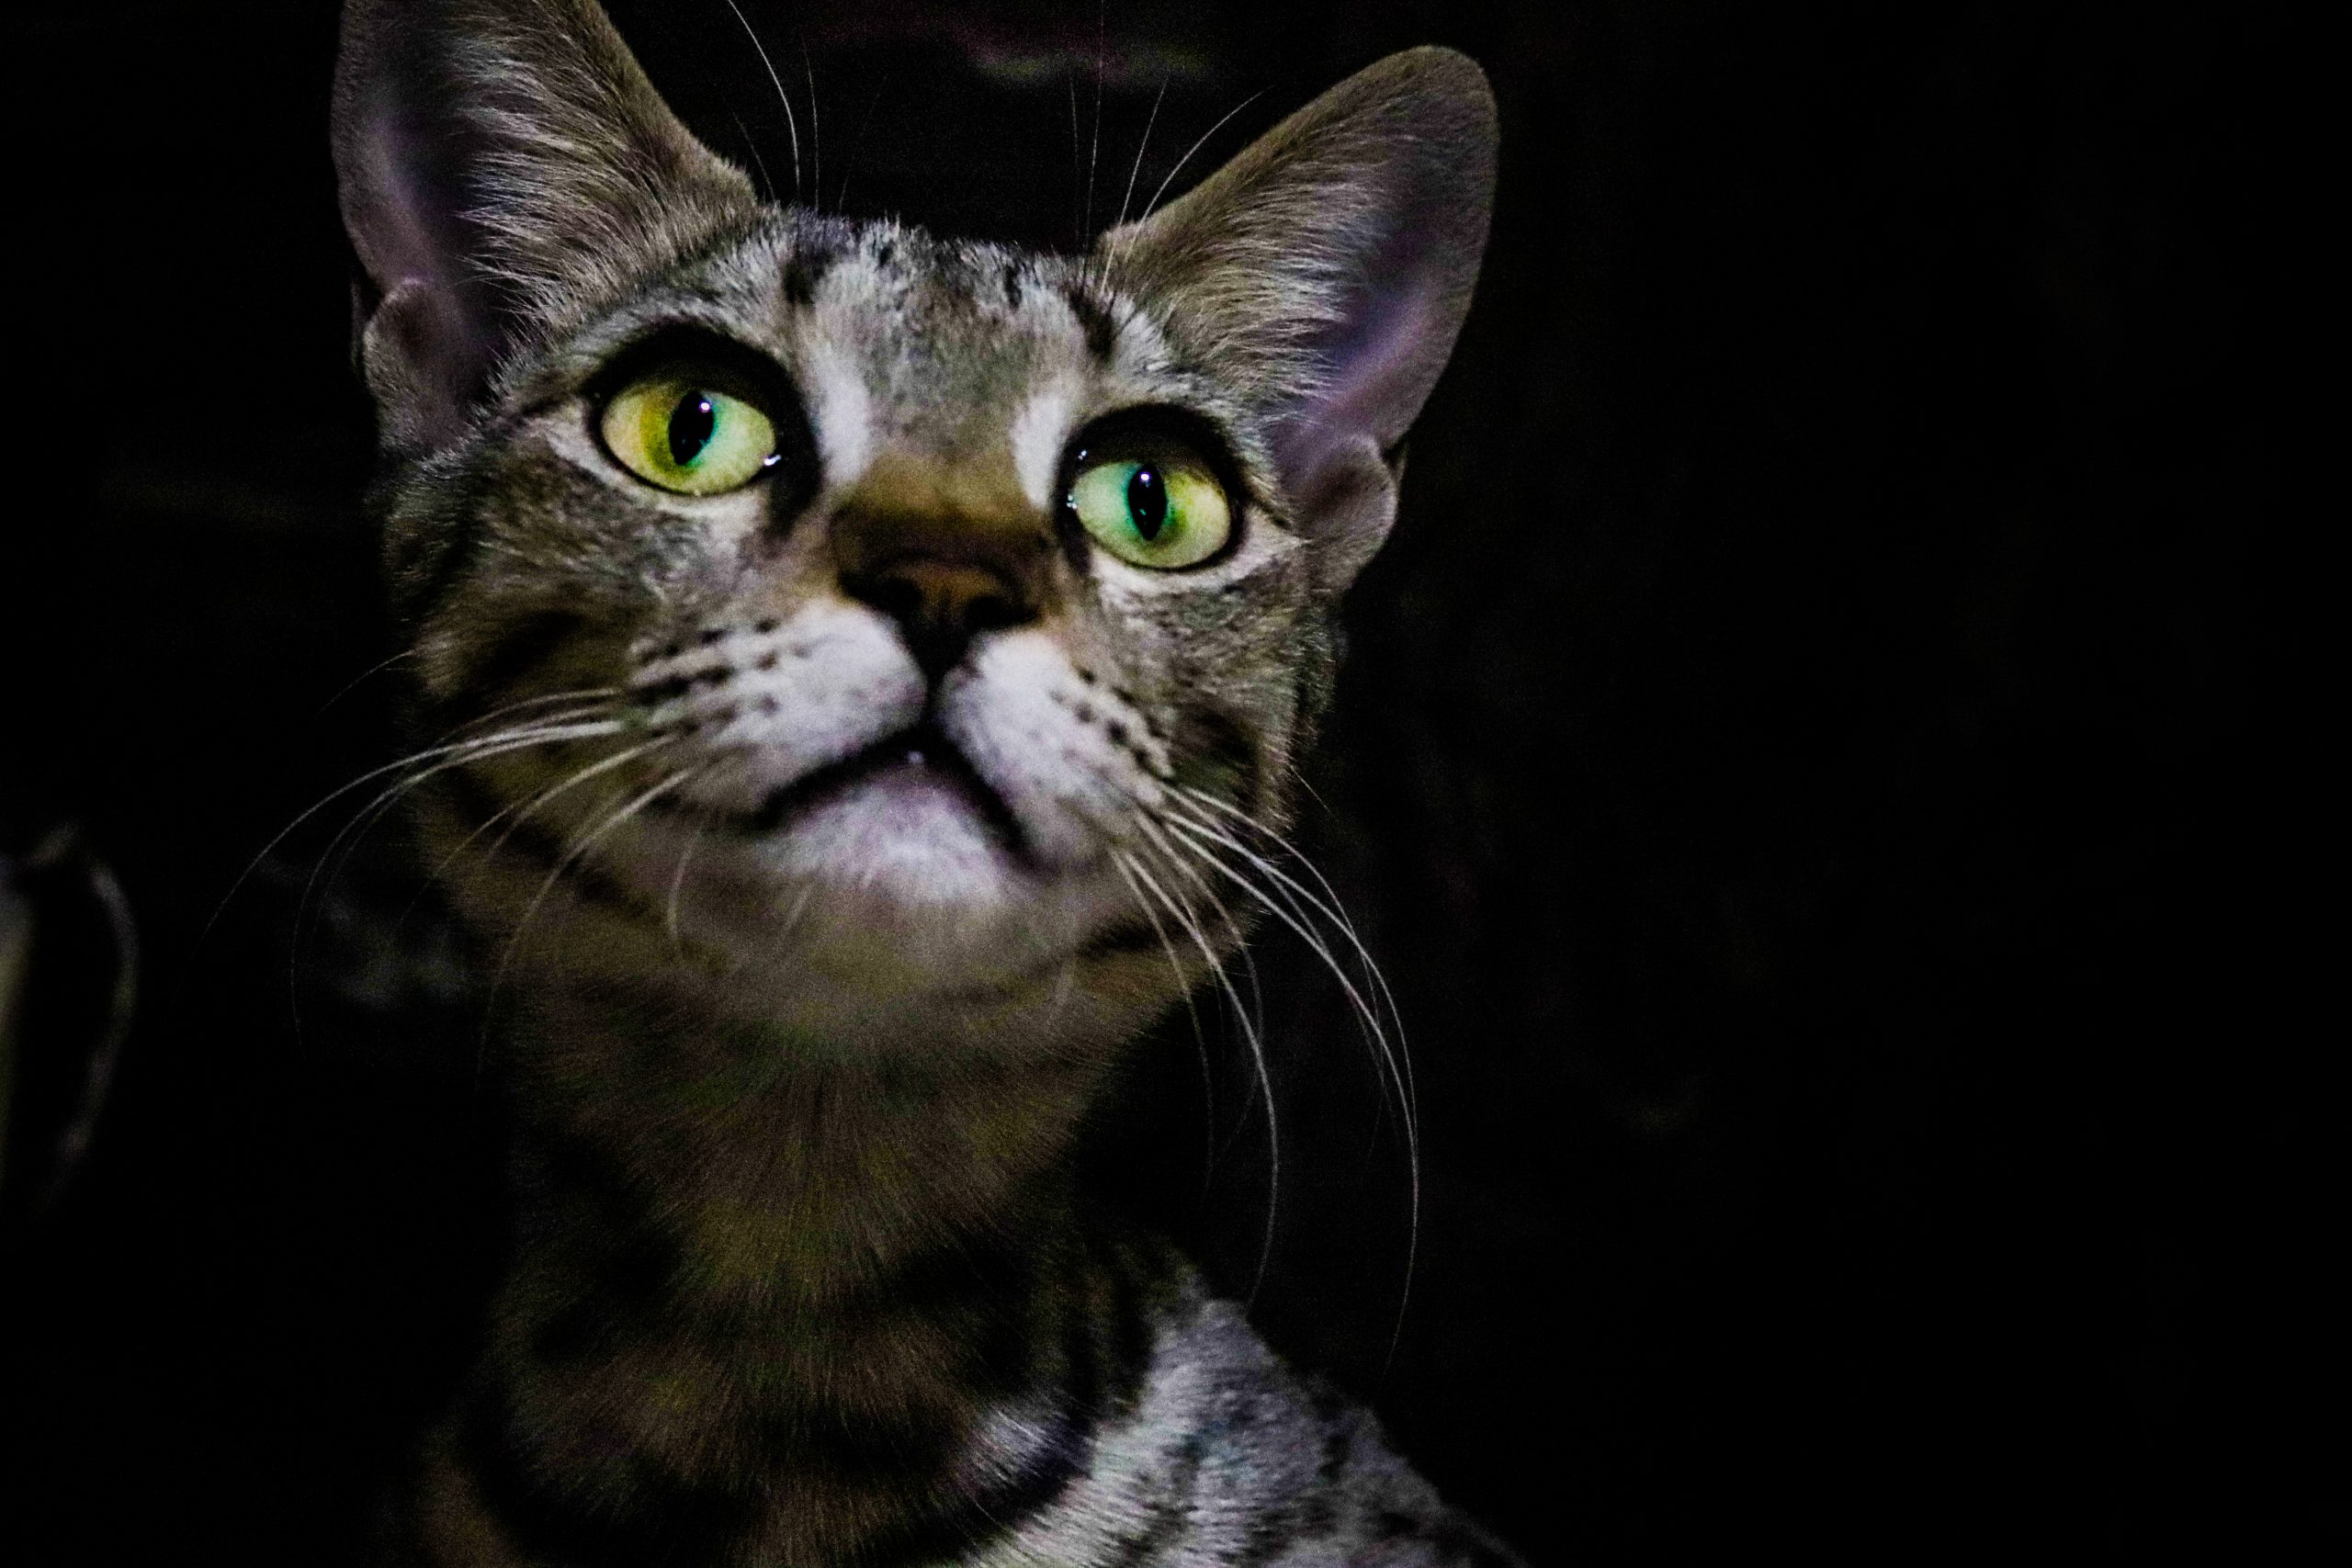 Cat in the dark